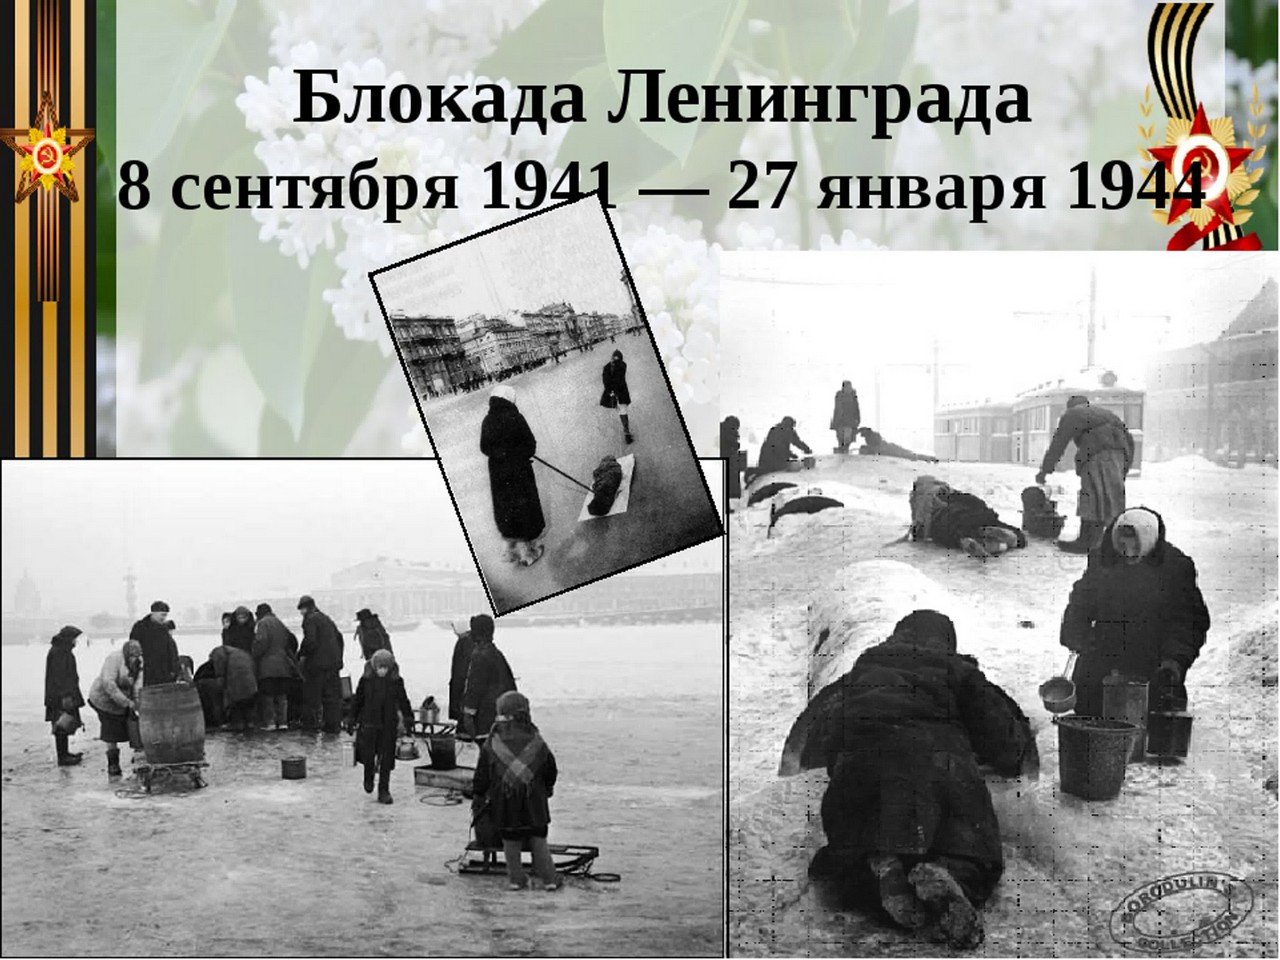 Ленинград даты. Блокада Ленинграда 8 сентября 1941 27 января 1944.